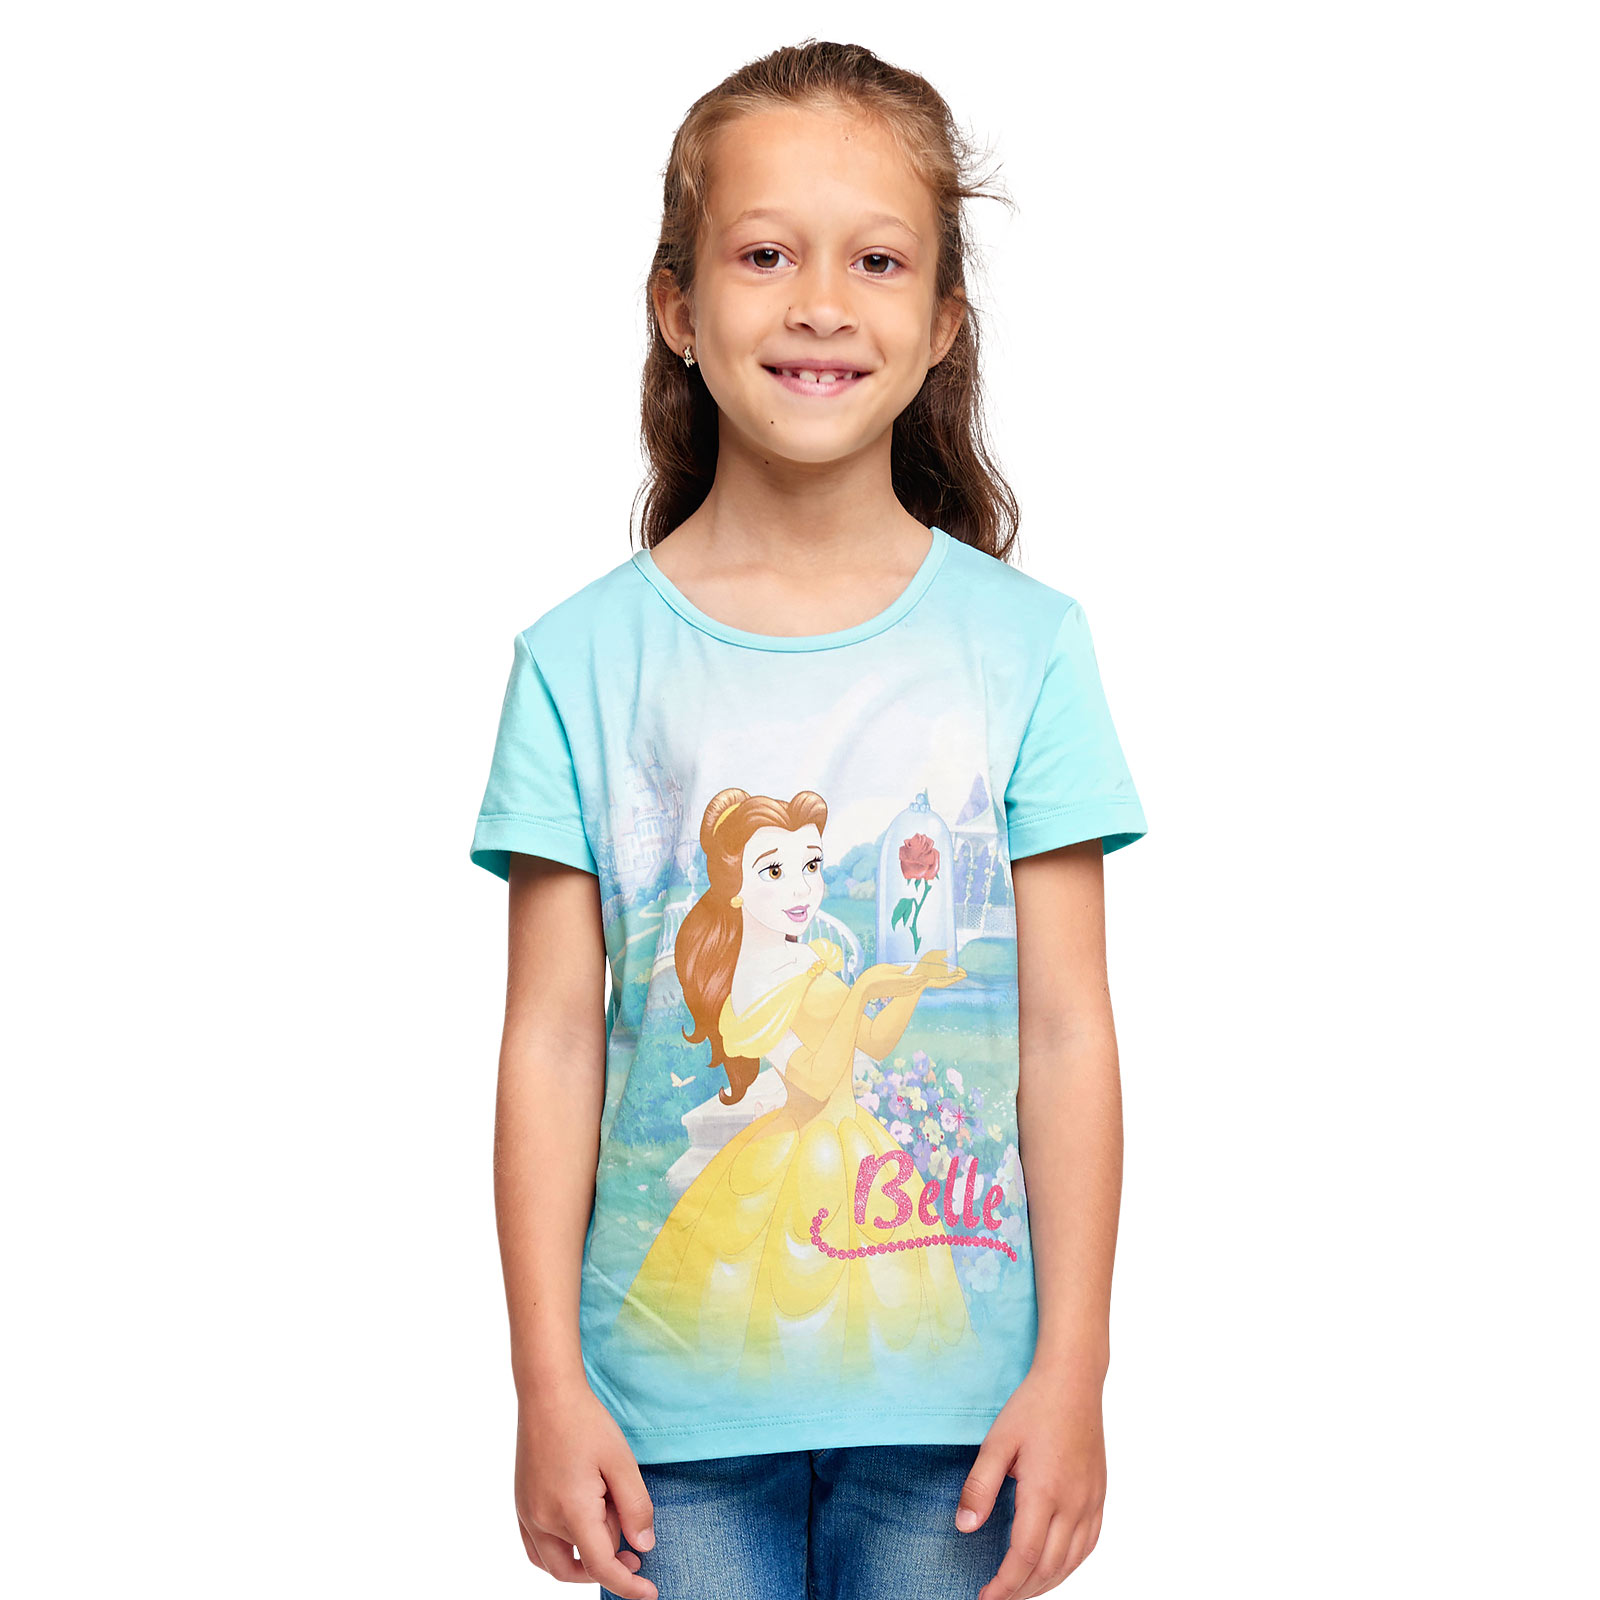 Belle en het Beest - Belle Kinder T-shirt Turkoois